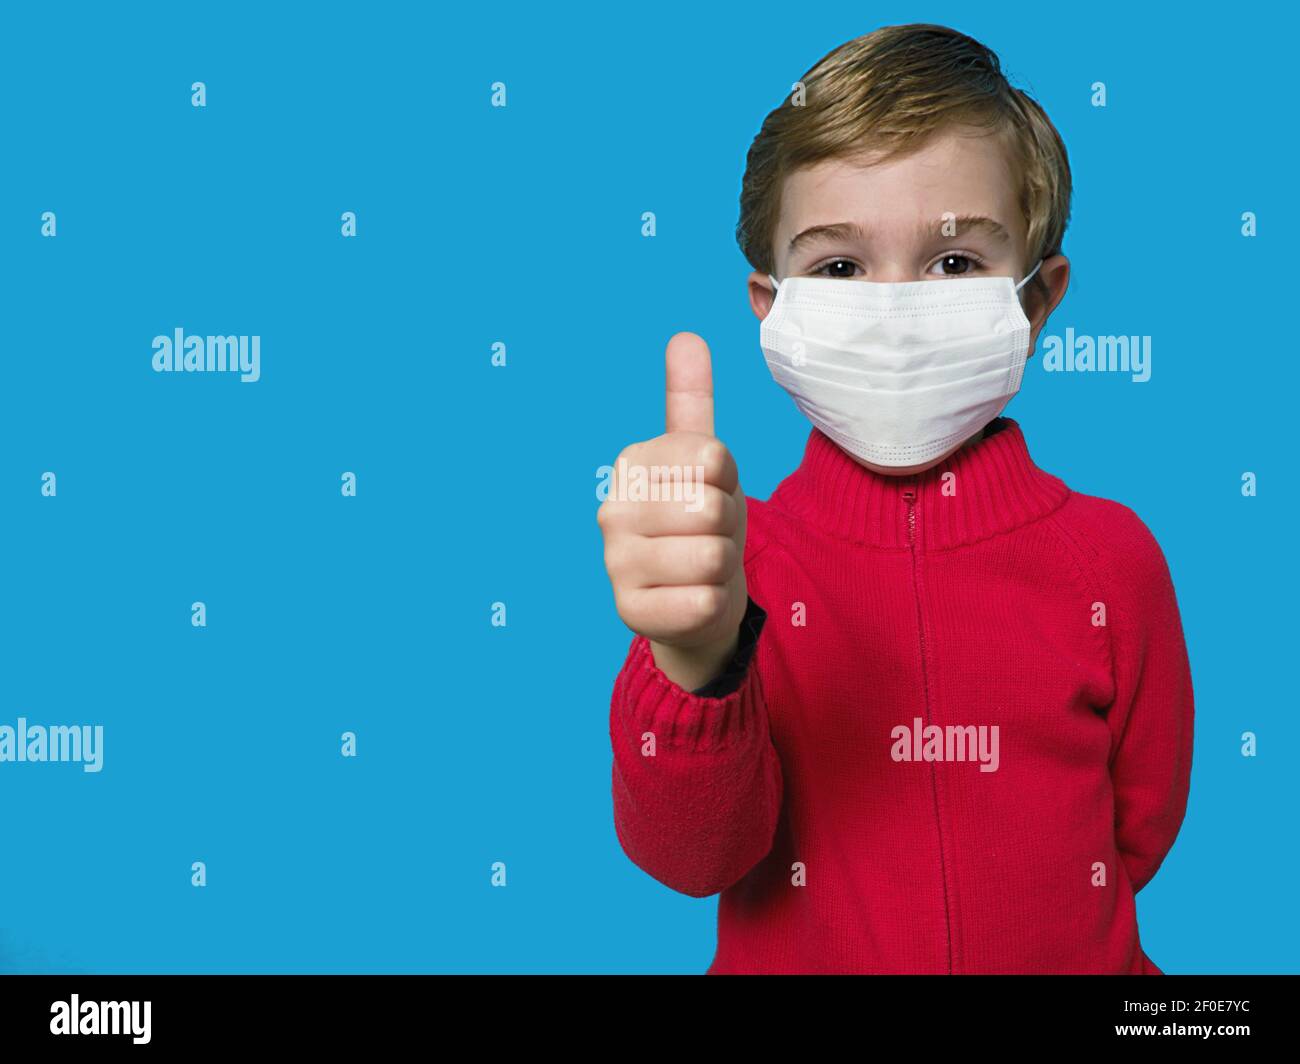 Child with white face mask show thumb up on blue background. Covid-19 coronavirus pandemic Stock Photo